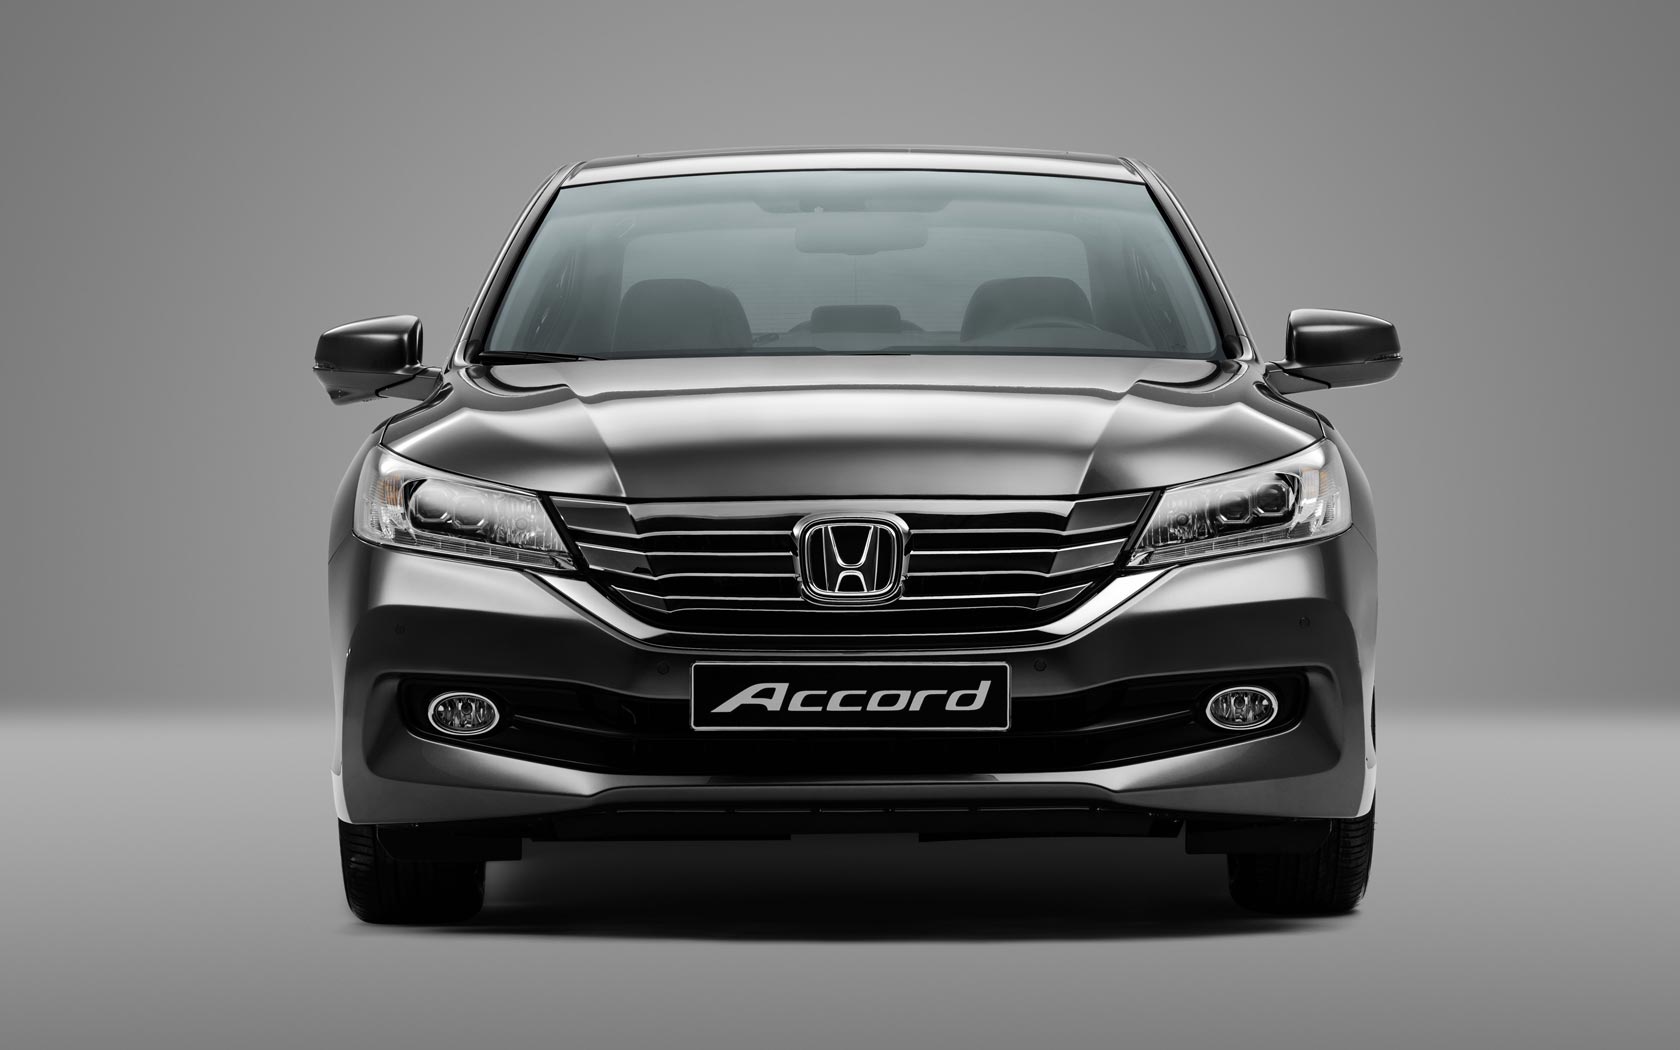  Honda Accord (2015-2017)